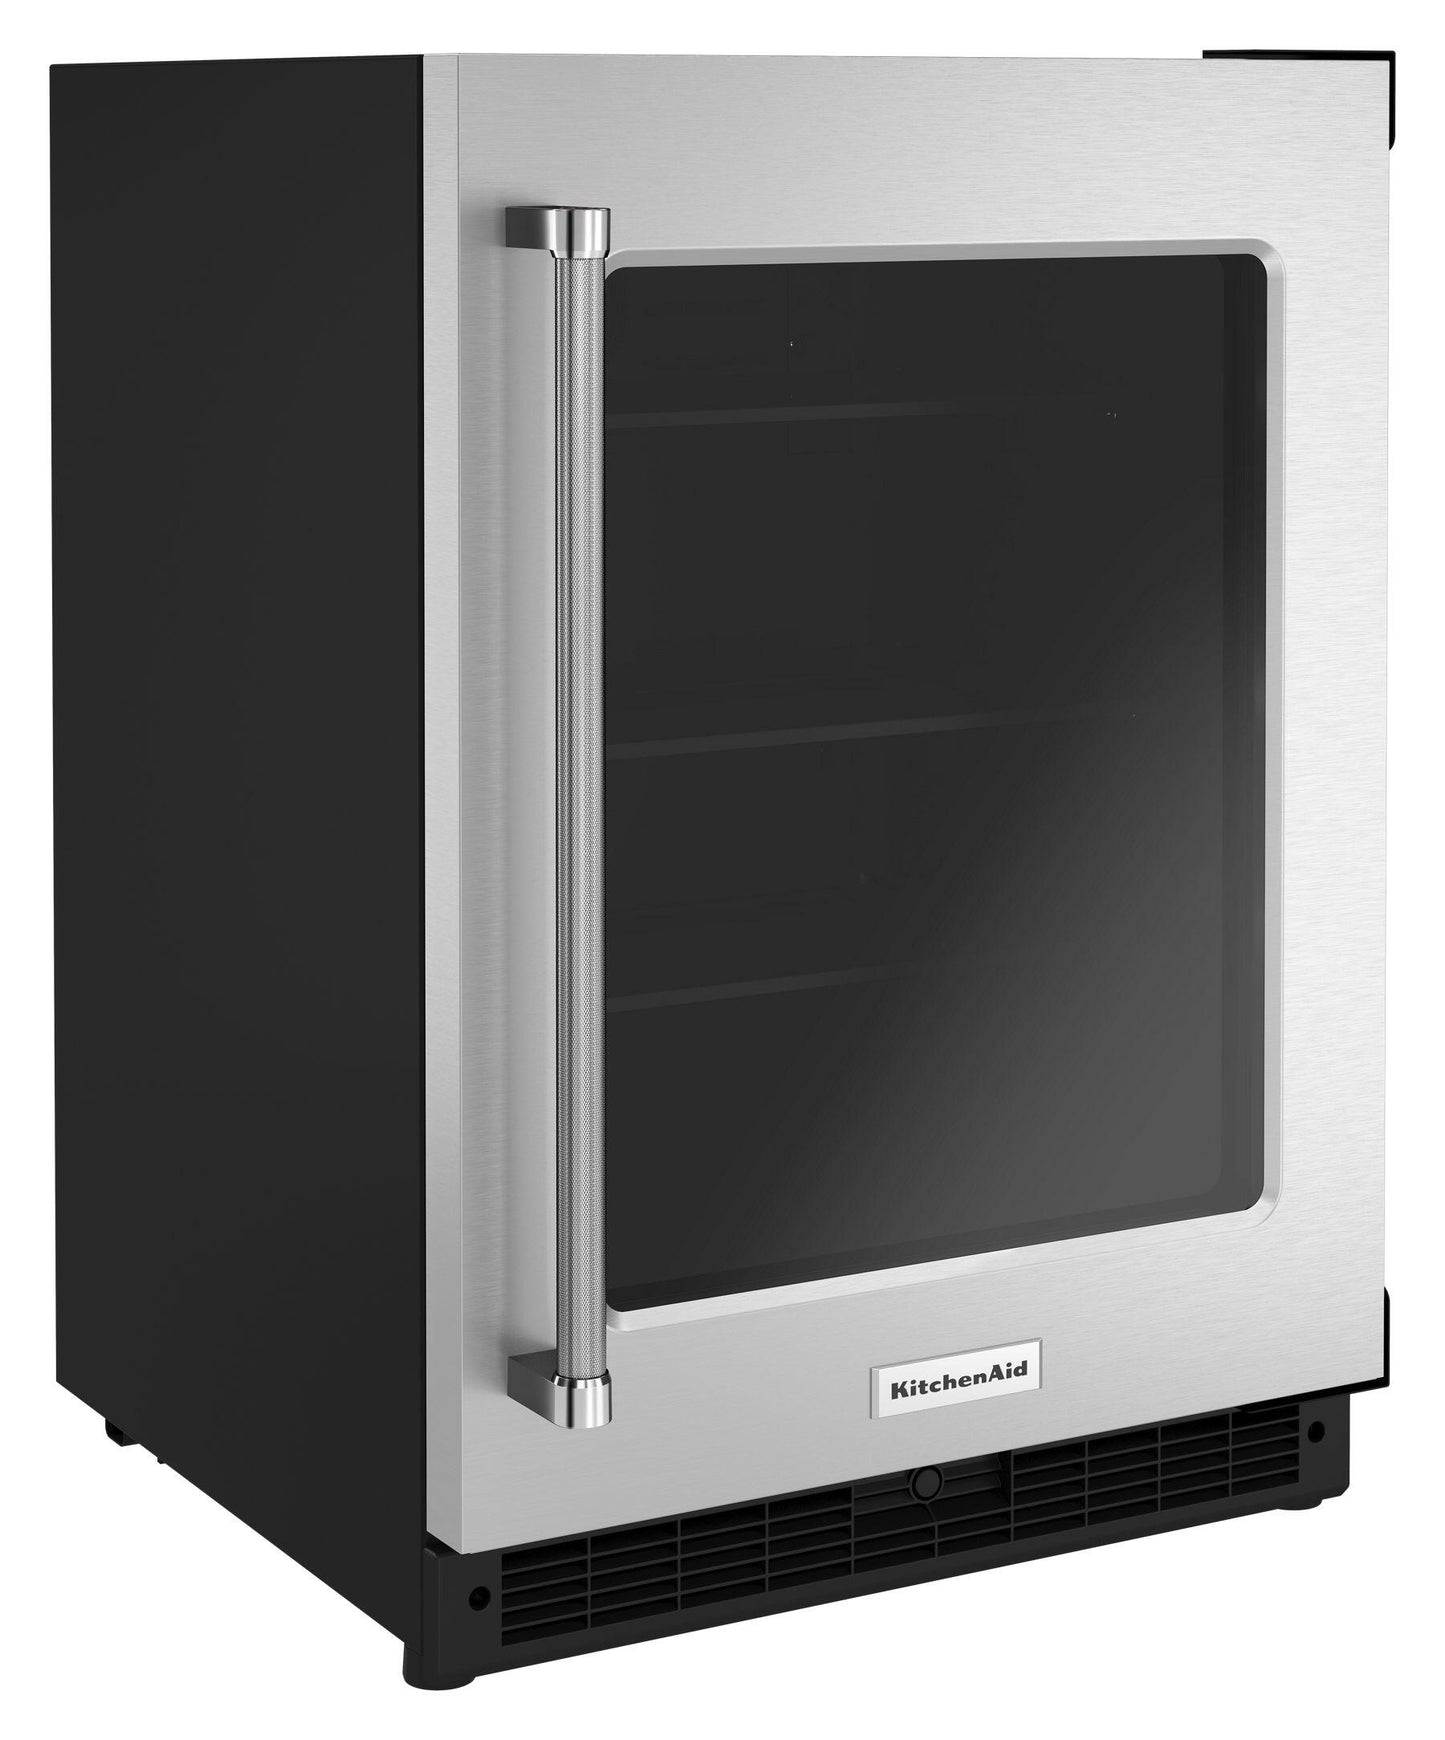 Kitchenaid KURR214KSB 24" Undercounter Refrigerator With Glass Door - Black Cabinet/Stainless Doors